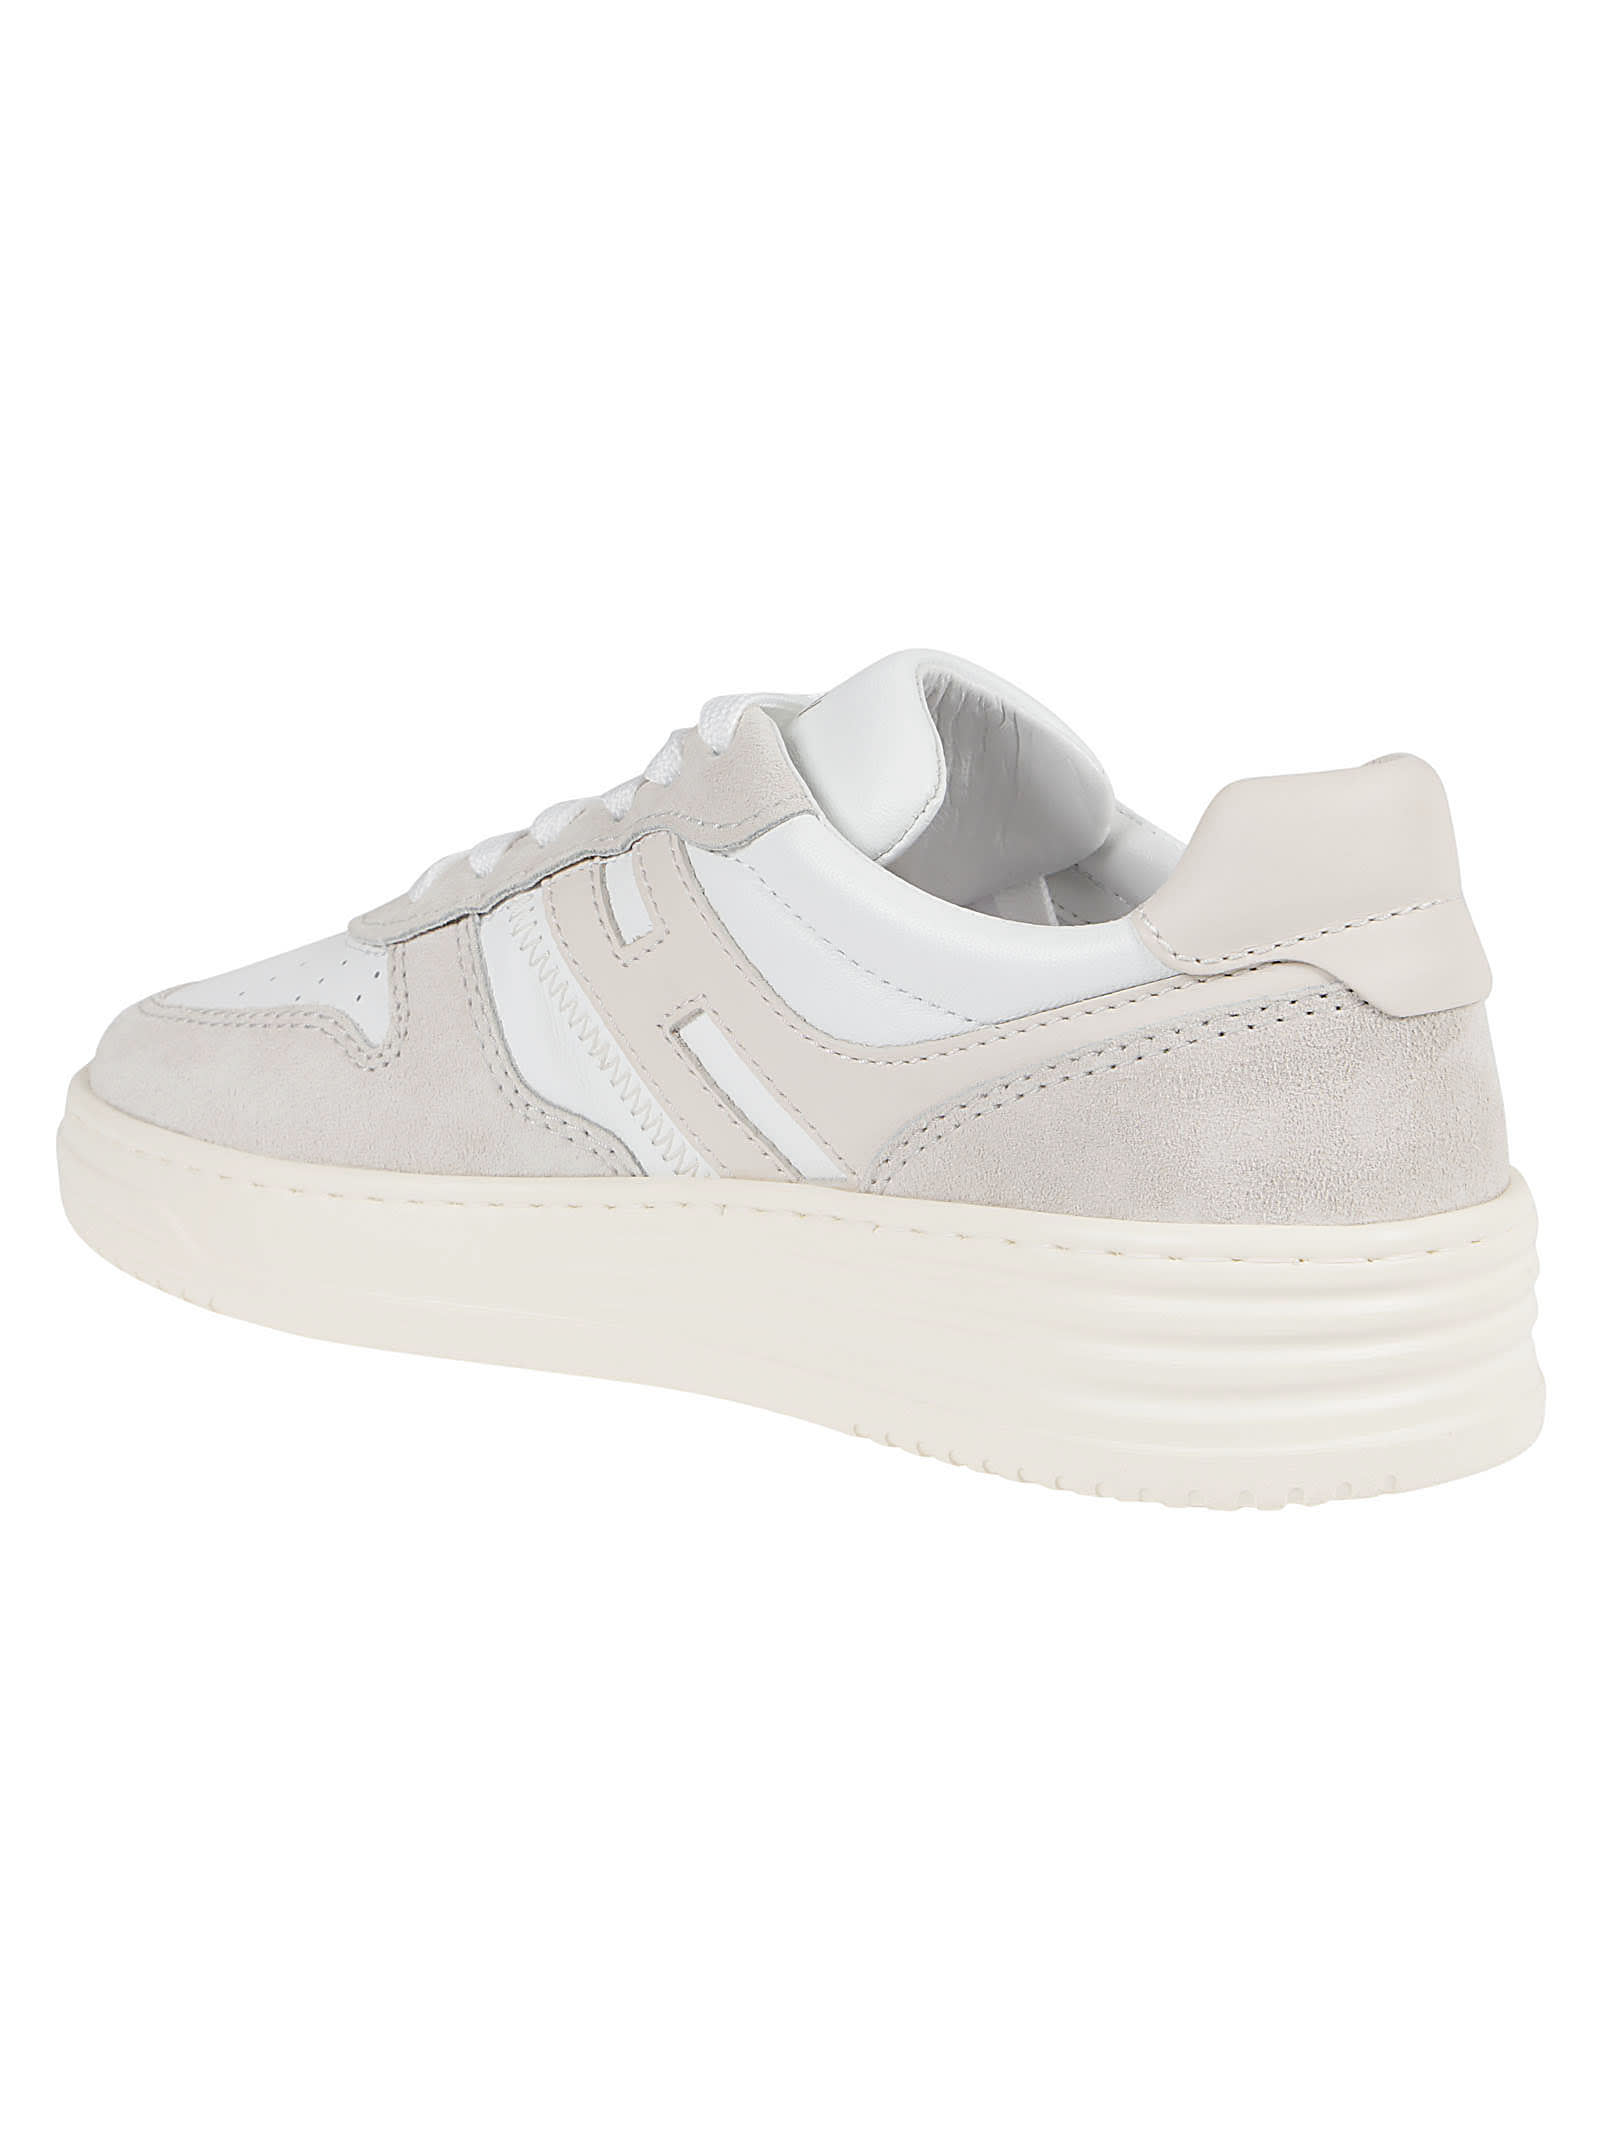 Shop Hogan H630 Sneakers In Bianco/bianco Marmo